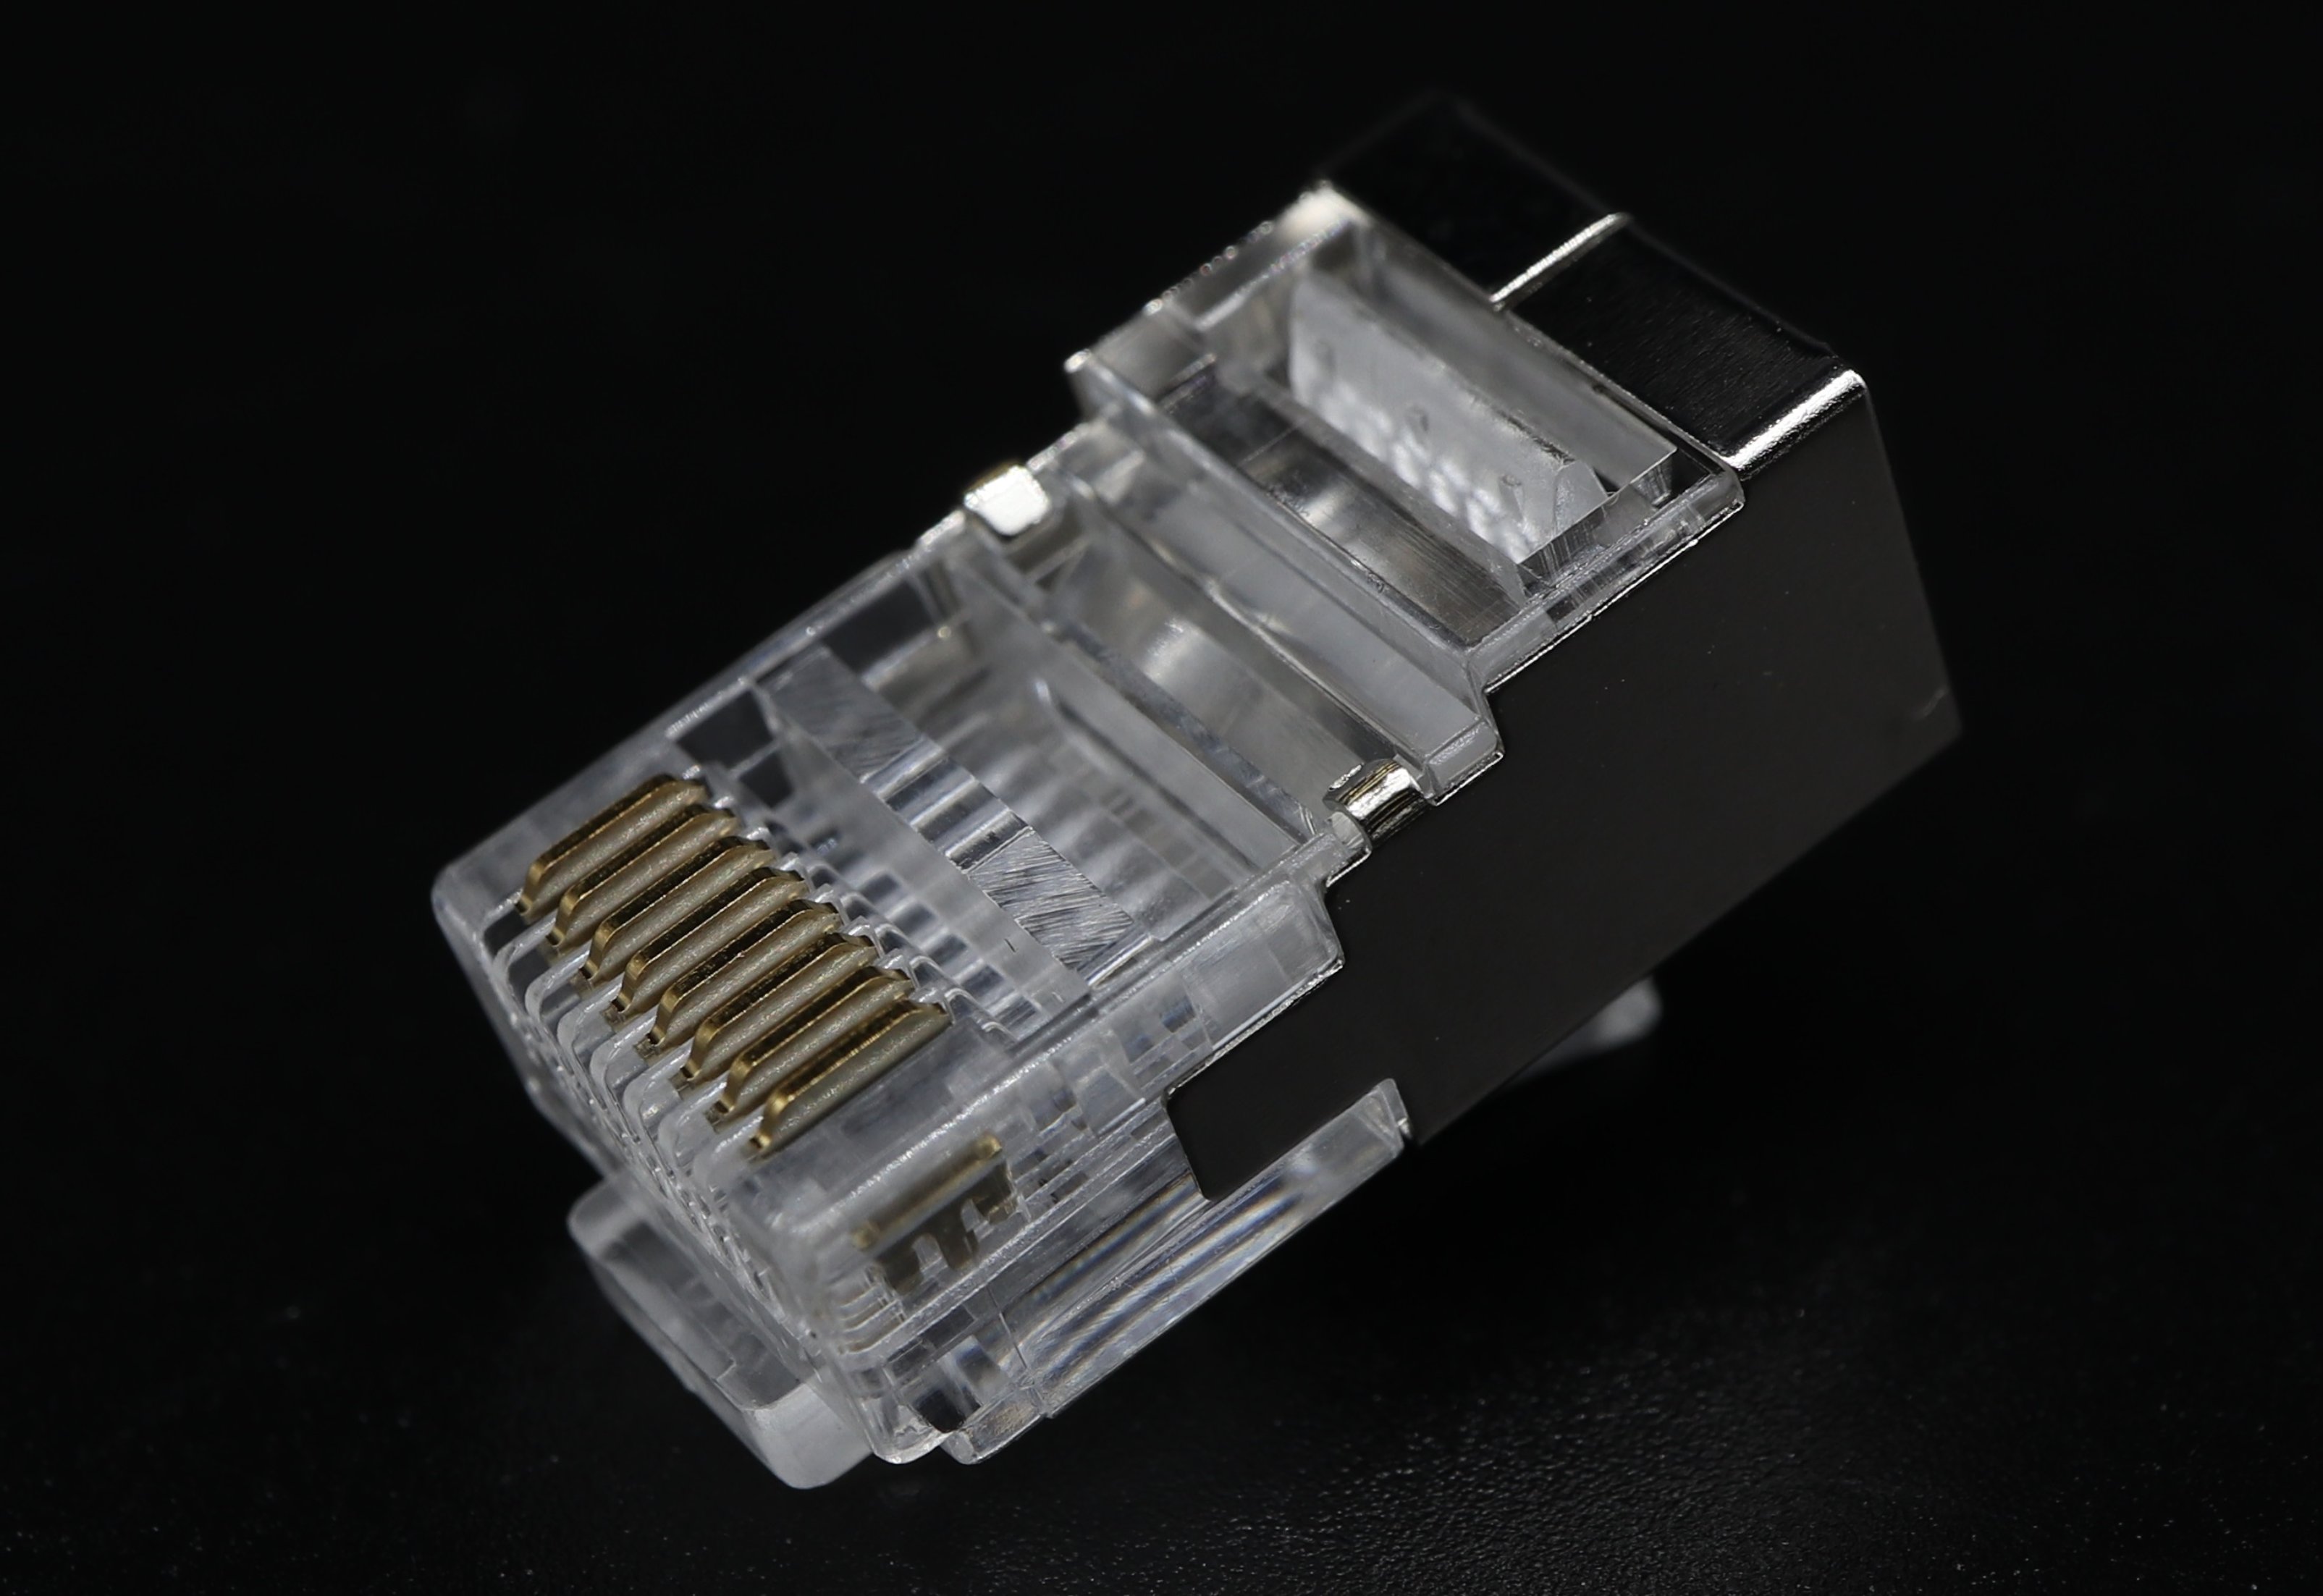 P8-003-1 - Modular plugs